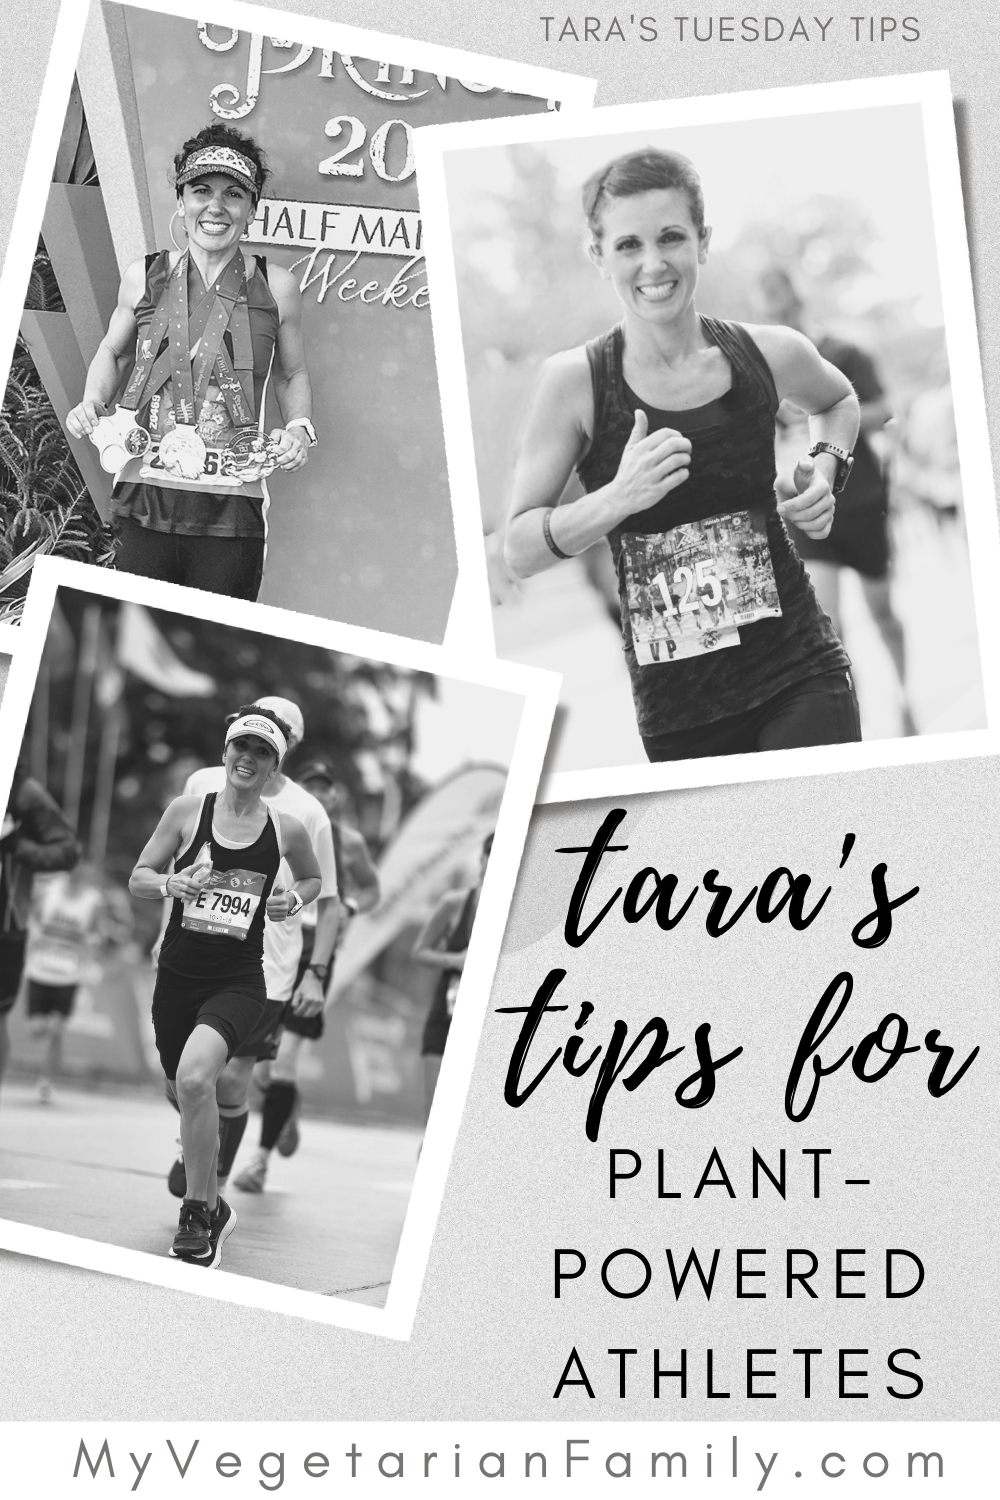 Tara's Tips For Plant-Powered Athletes | My Vegetarian Family #nutritiontips #myvegetarianfamily #tarastuesdaytips #plantpoweredathletes #veganrunners